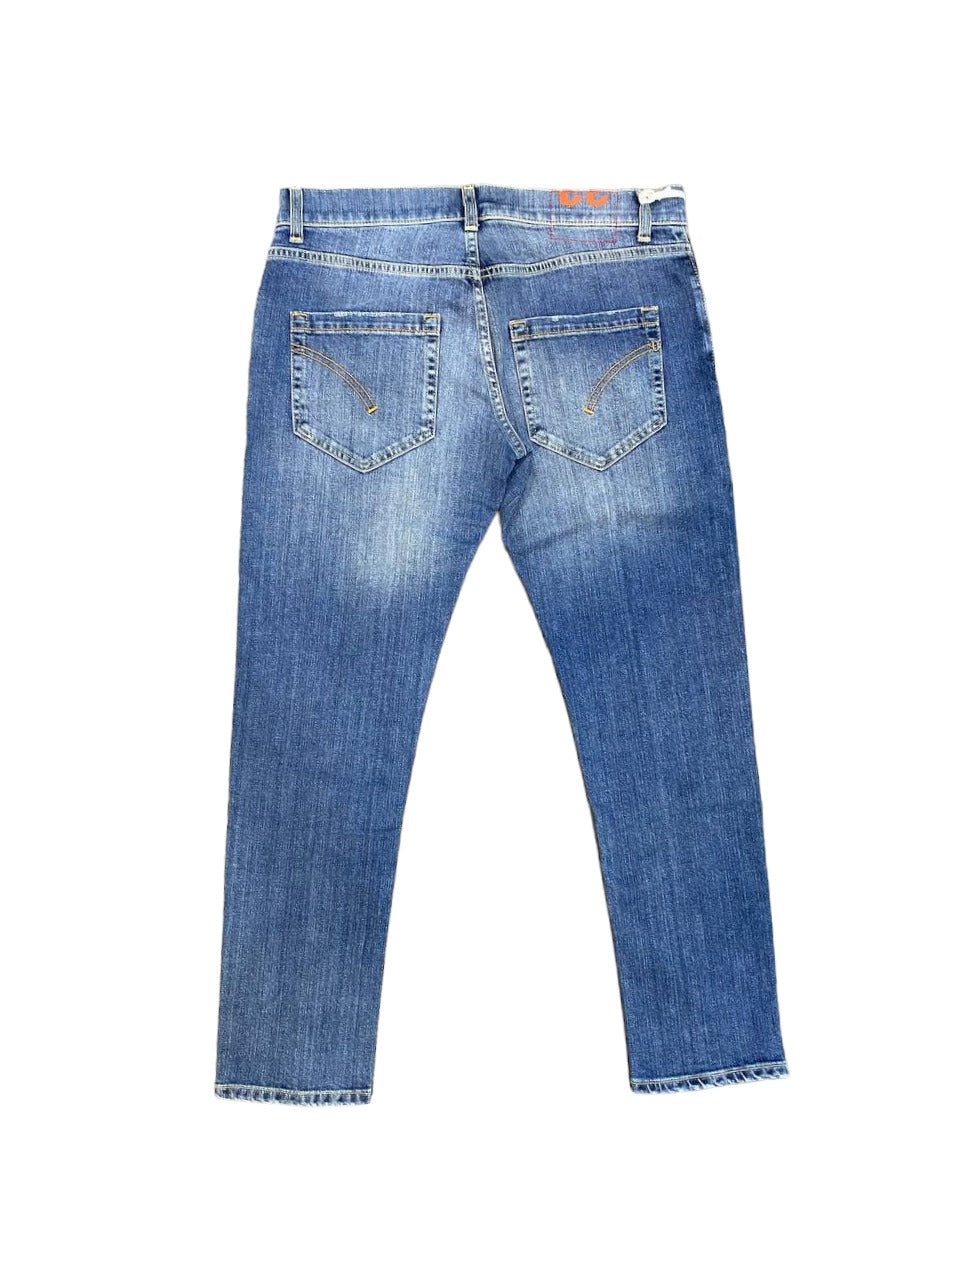 Dondup Men's Jeans